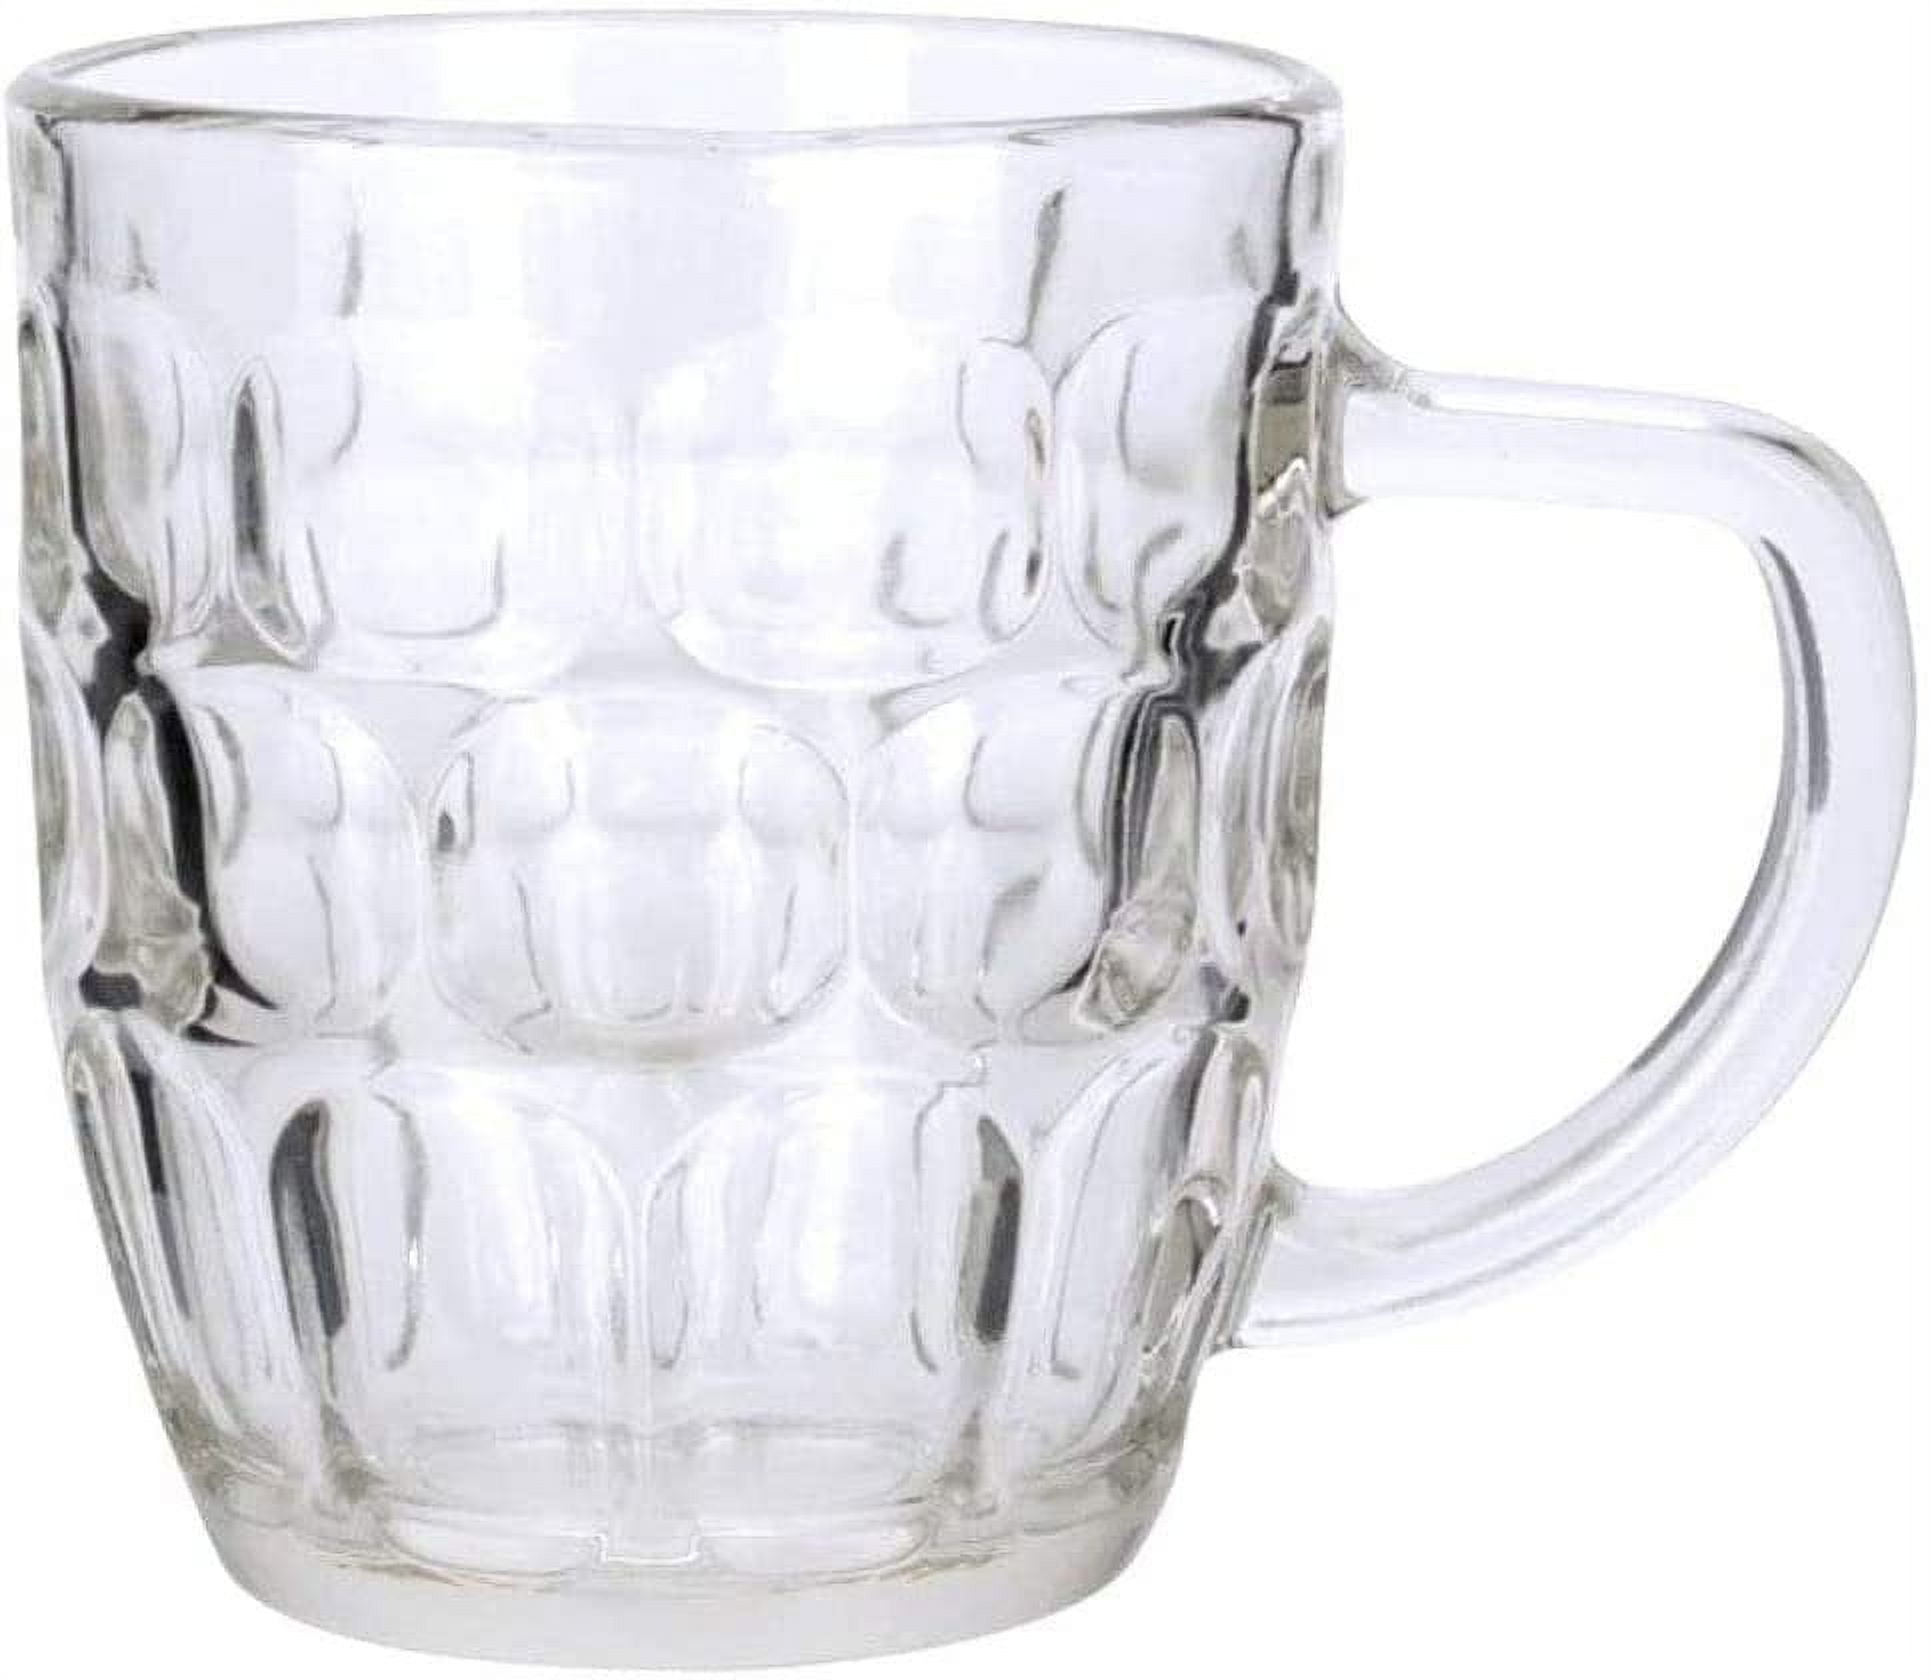 16oz 2pk Glass Beer Mugs - Threshold™